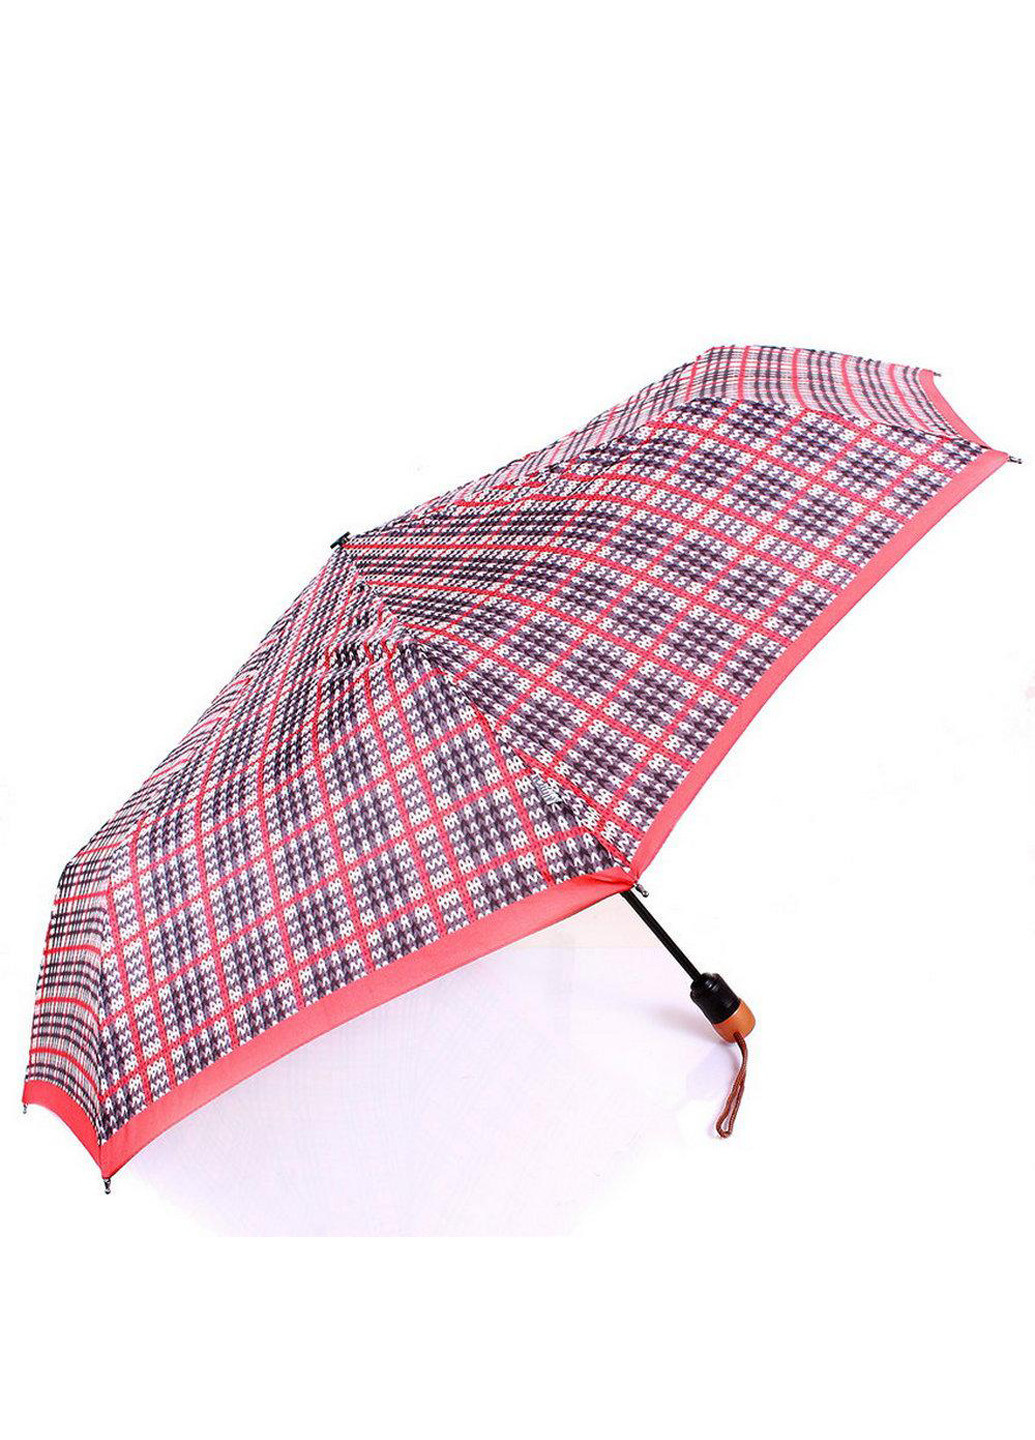 Жіночий складаний парасолька повний автомат 98 см Airton (194321211)